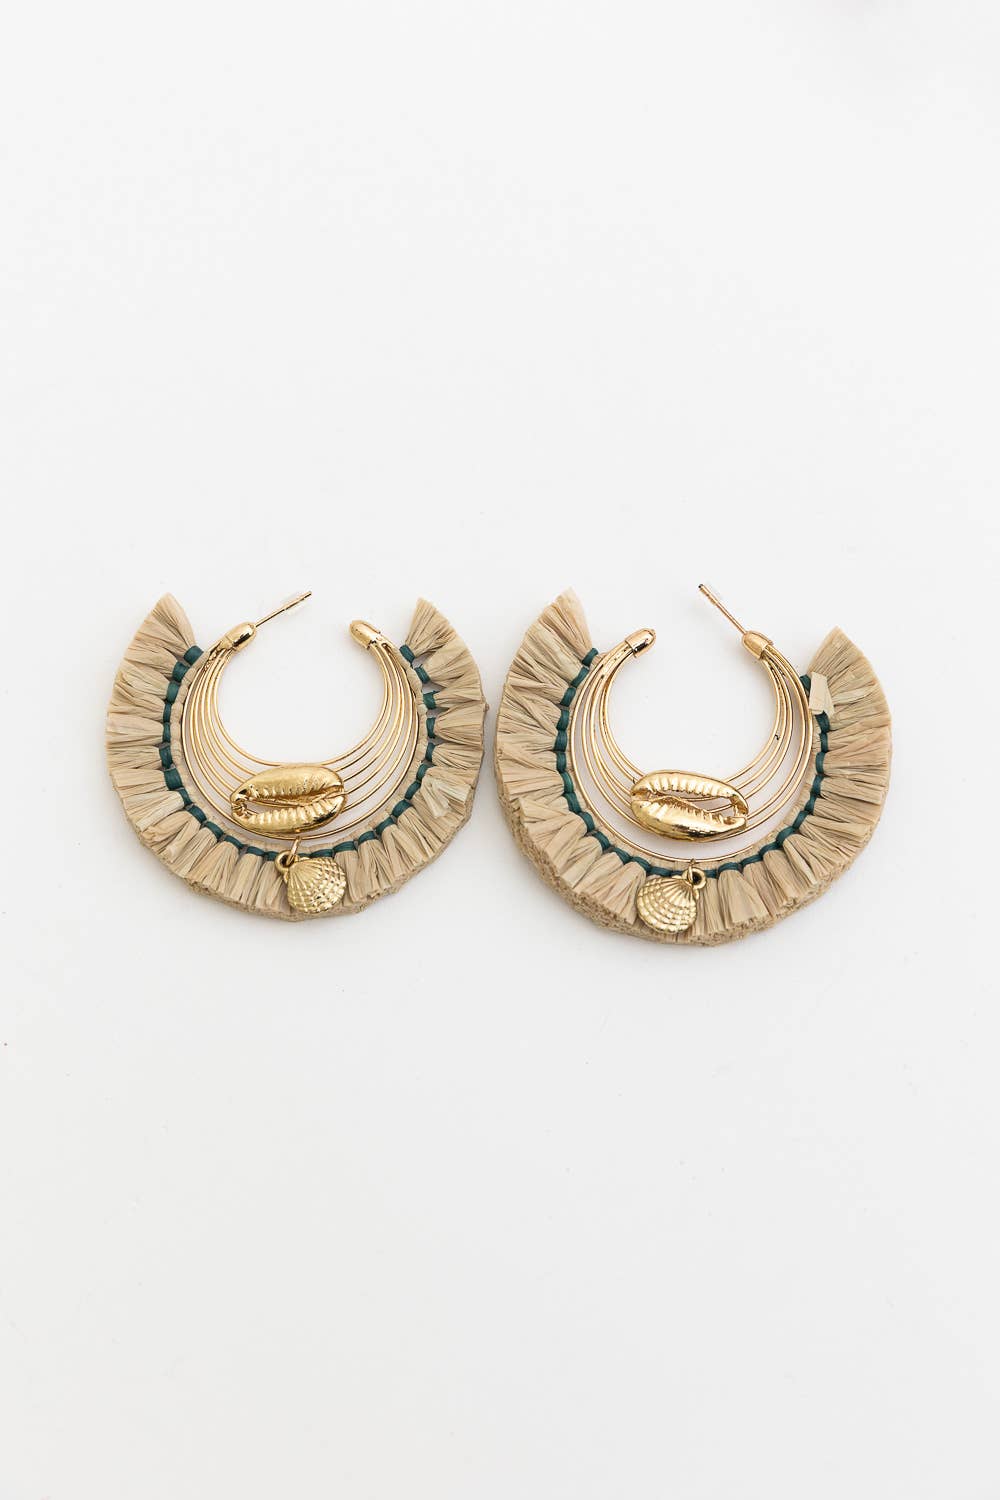 Seashell Glow Golden Raffia Hoop Earrings with white background